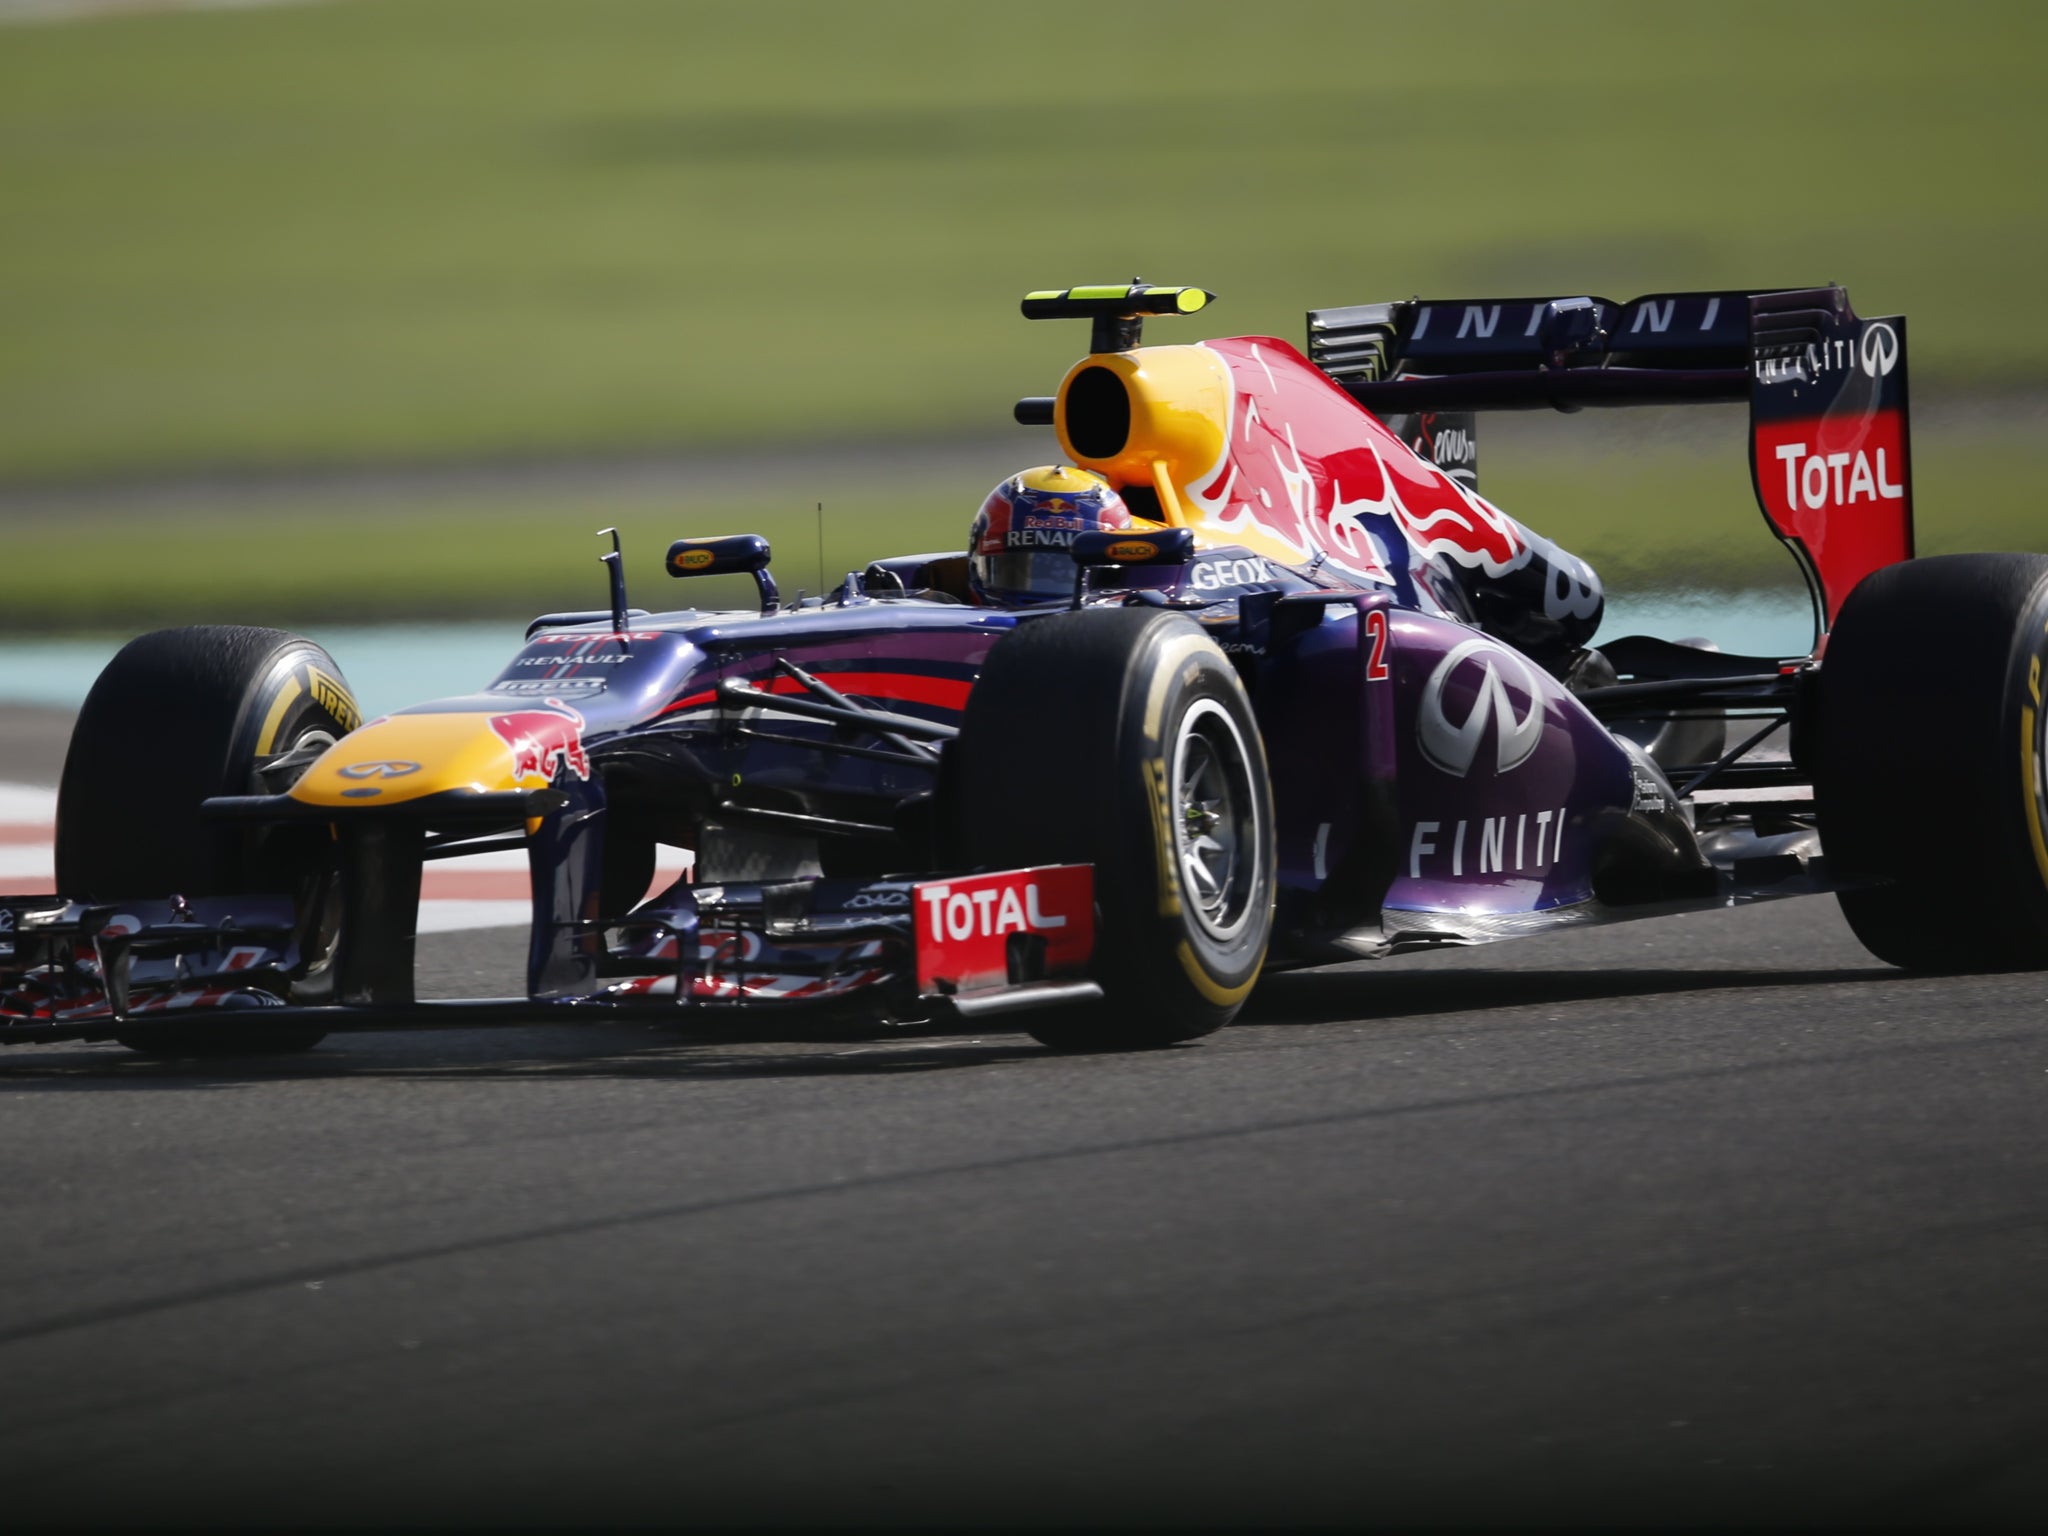 Australian Mark Webber will start the Abu Dhabi Grand Prix from pole